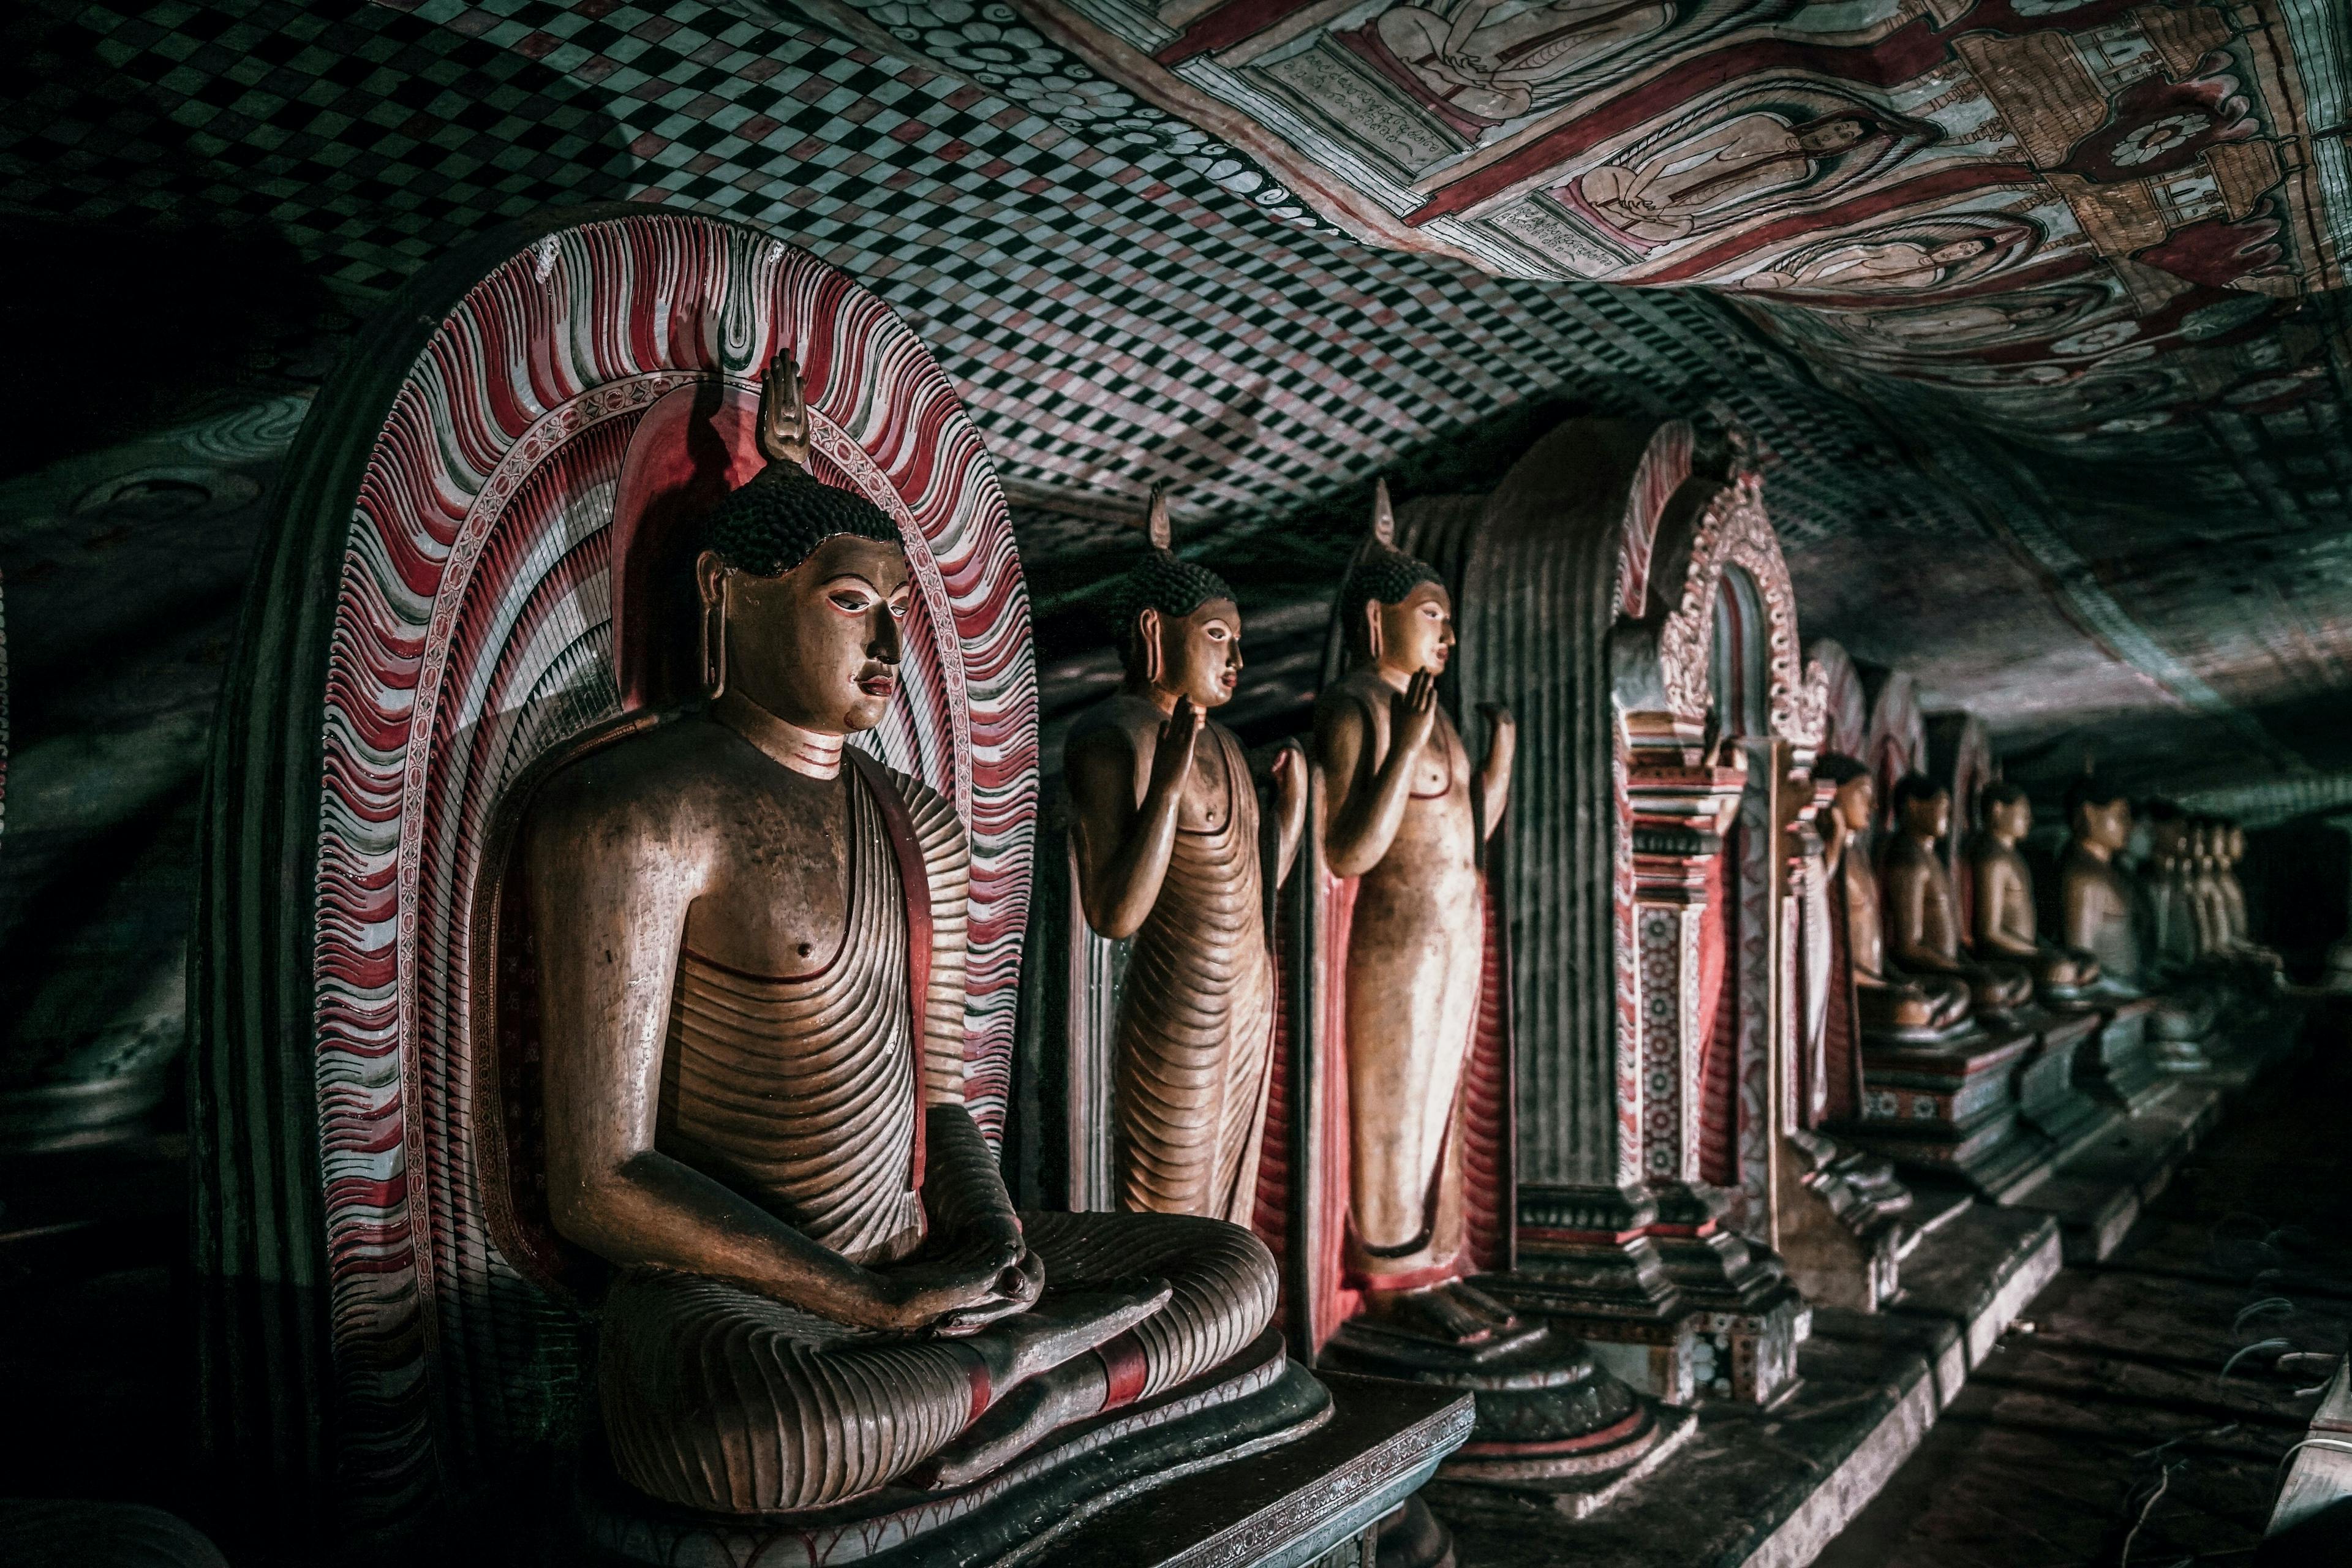 Numerous Buddhas in Dambulla Cave Temple in Sri Lanka.